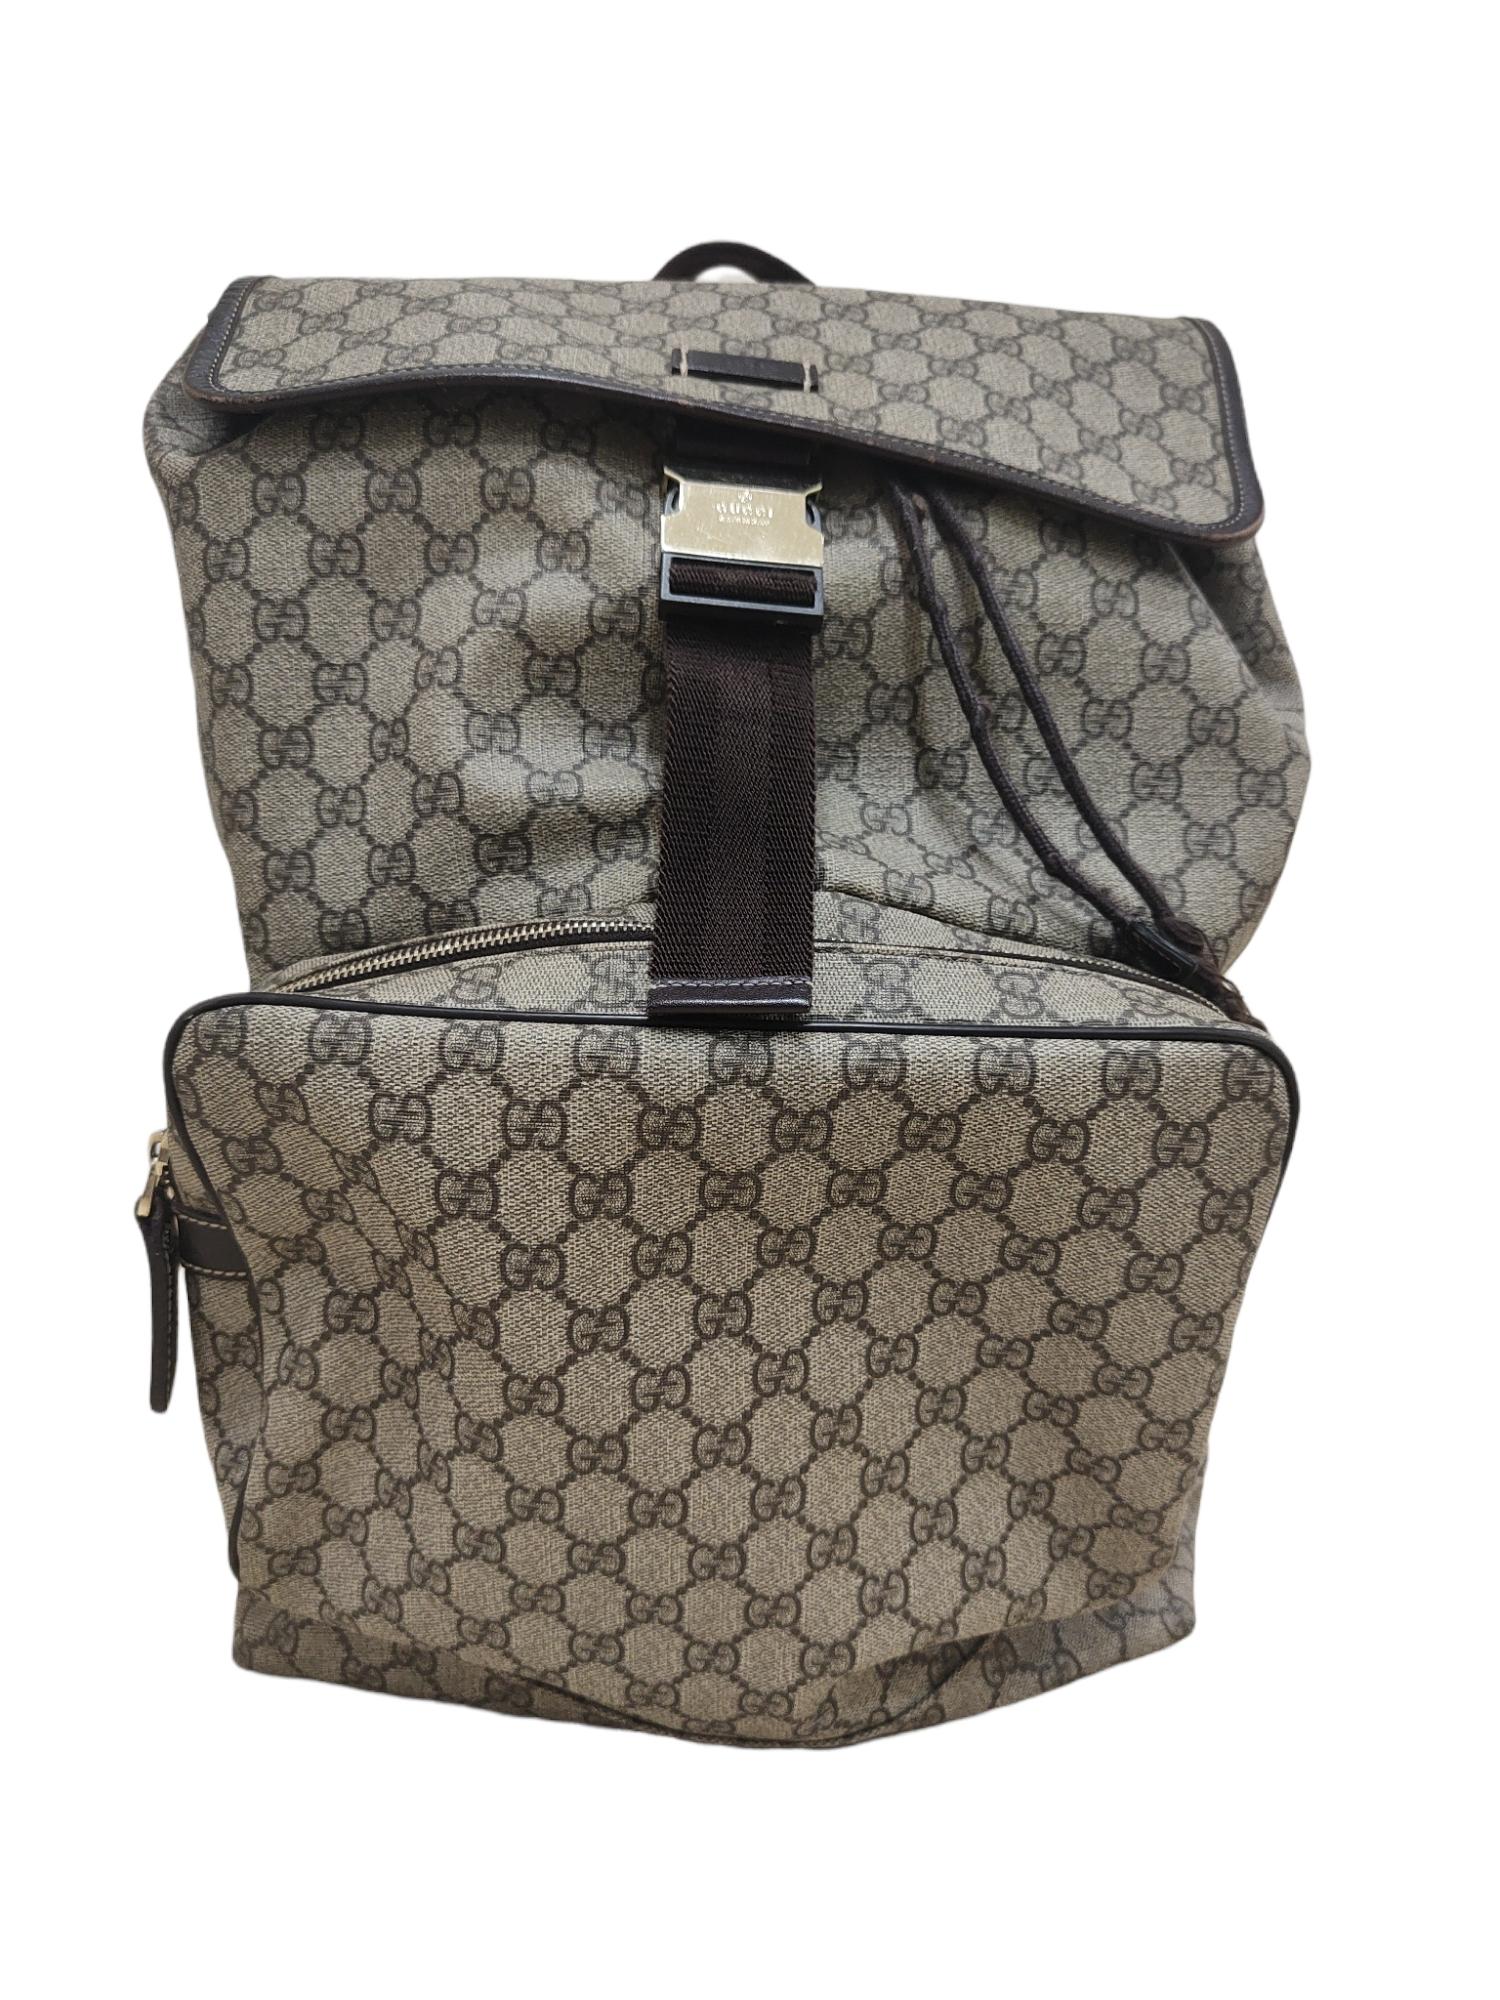 Gucci GG Monogram backpack
measurements: 43*31 cm, 18 cm depth